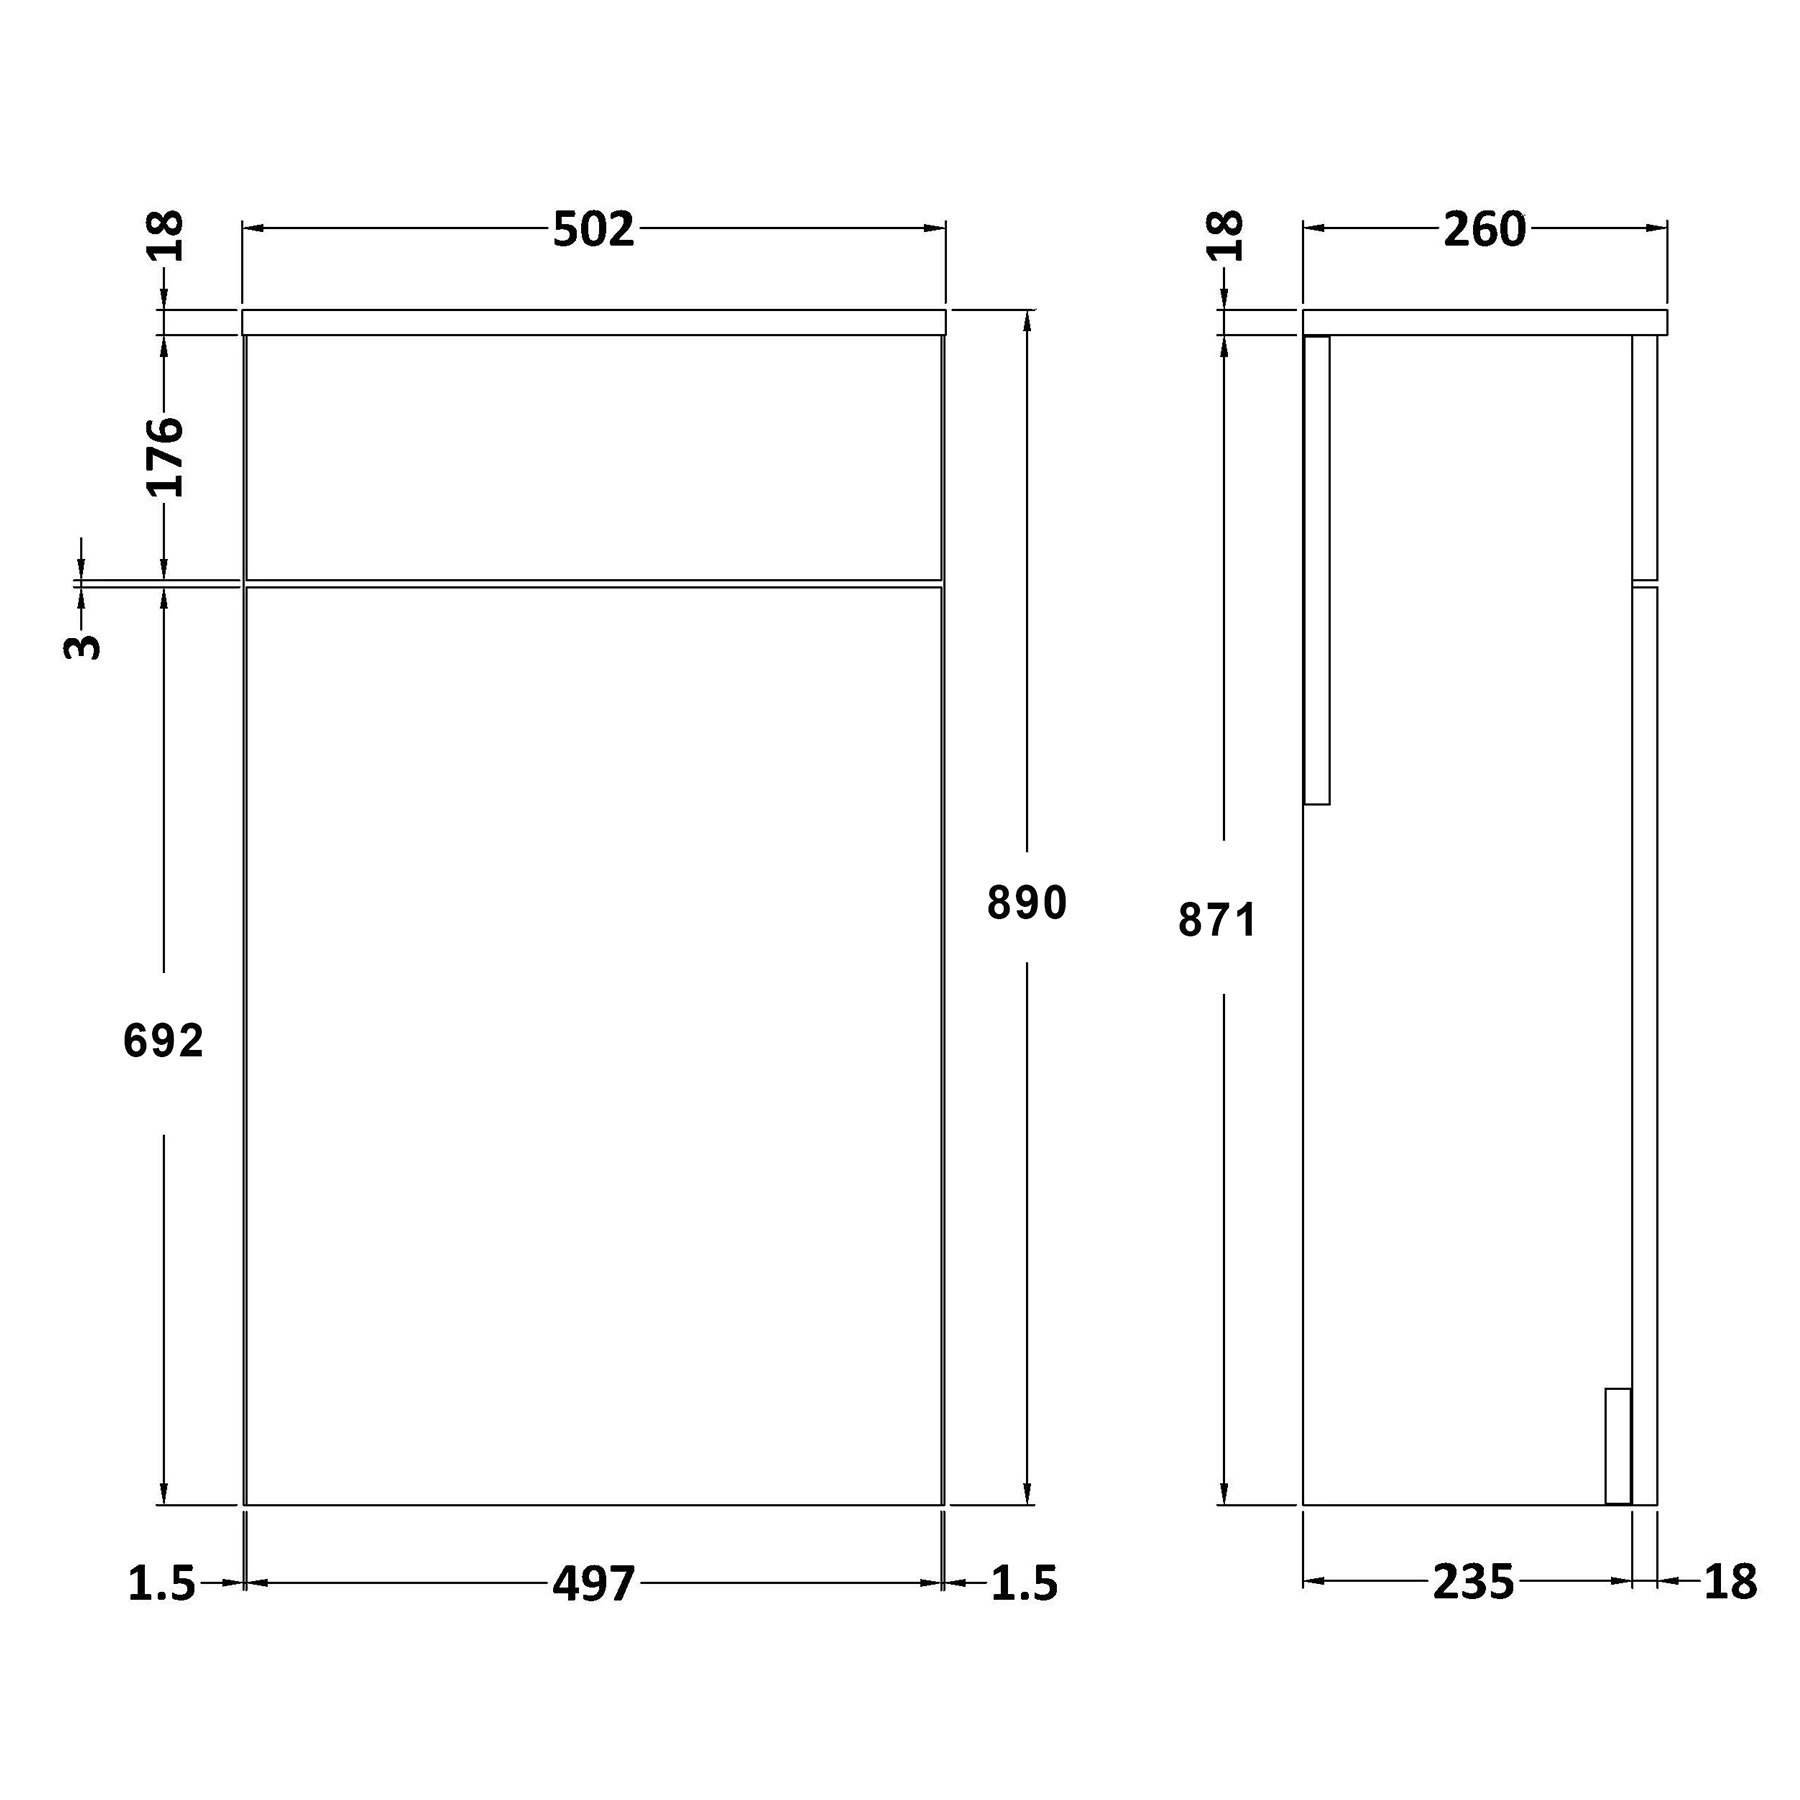 1000mm Indigo Grey Gloss 2 Drawer Furniture Pack with Mid Edge Basin & Slim Elena Back to Wall Toilet